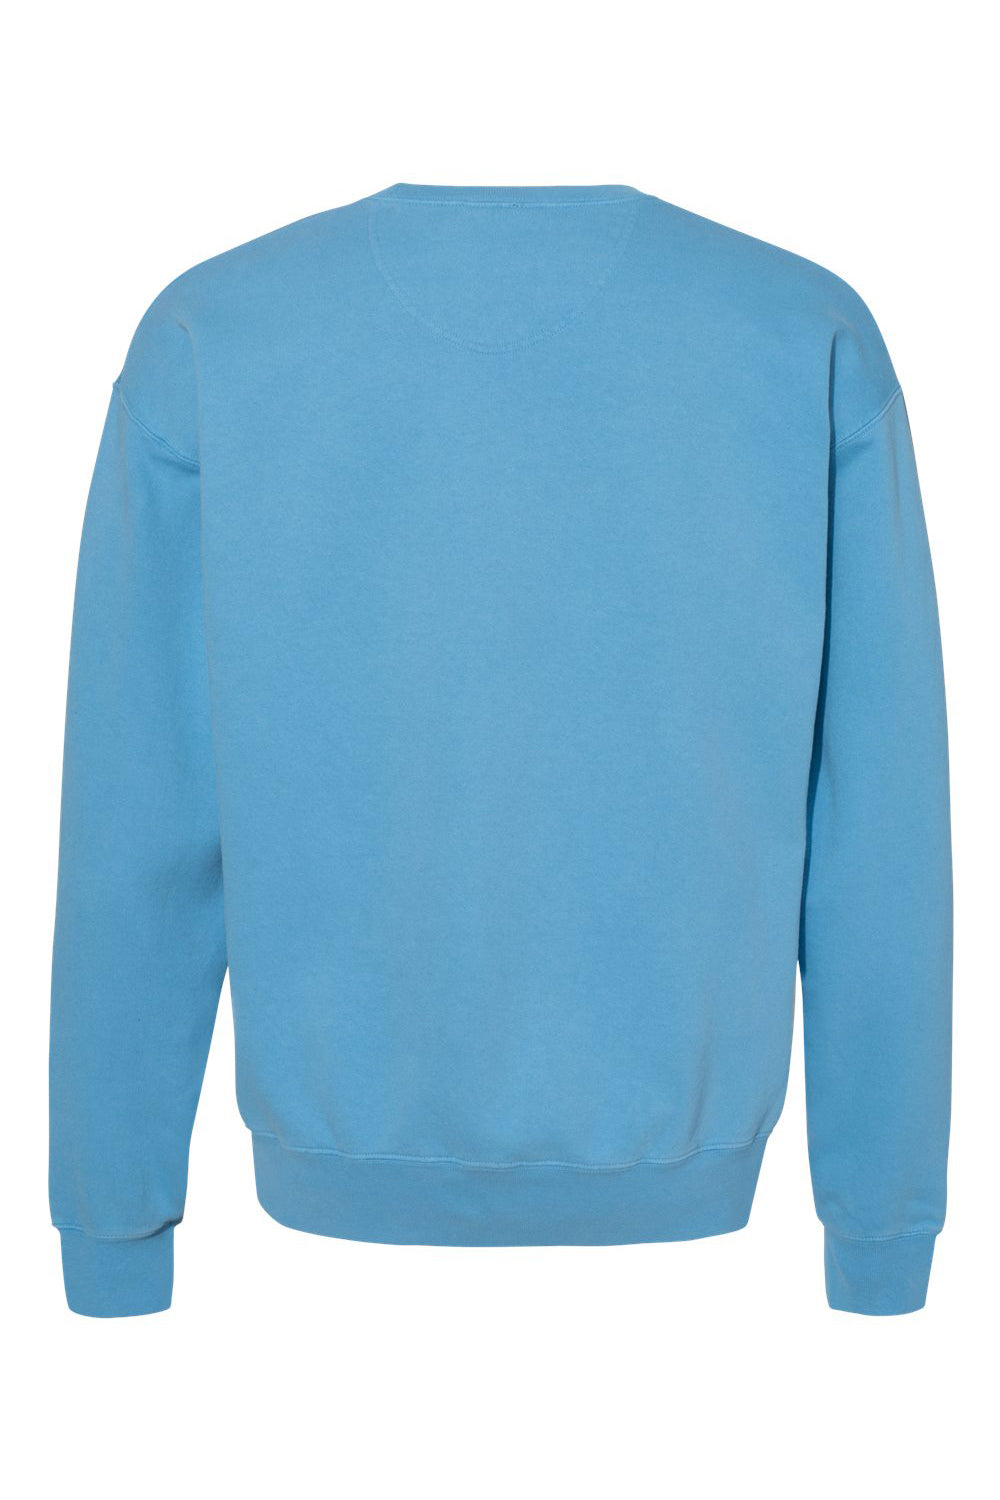 Champion CD400 Mens Garment Dyed Crewneck Sweatshirt Delicate Blue Flat Back